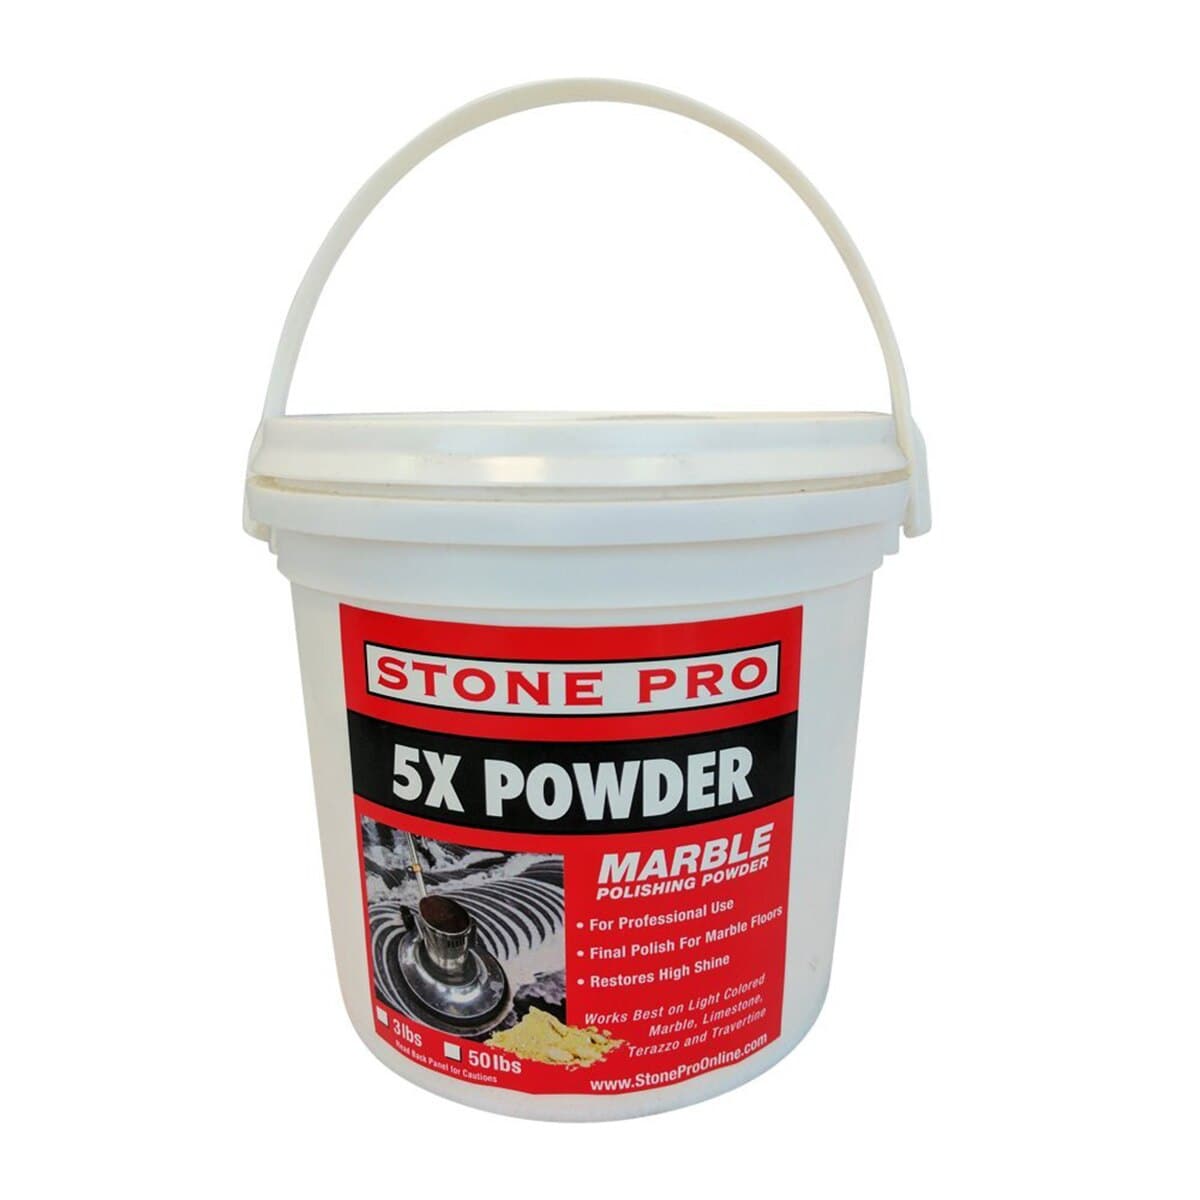 Stone Pro 5X Powder - Marble Polishing Powder - 3 Pound